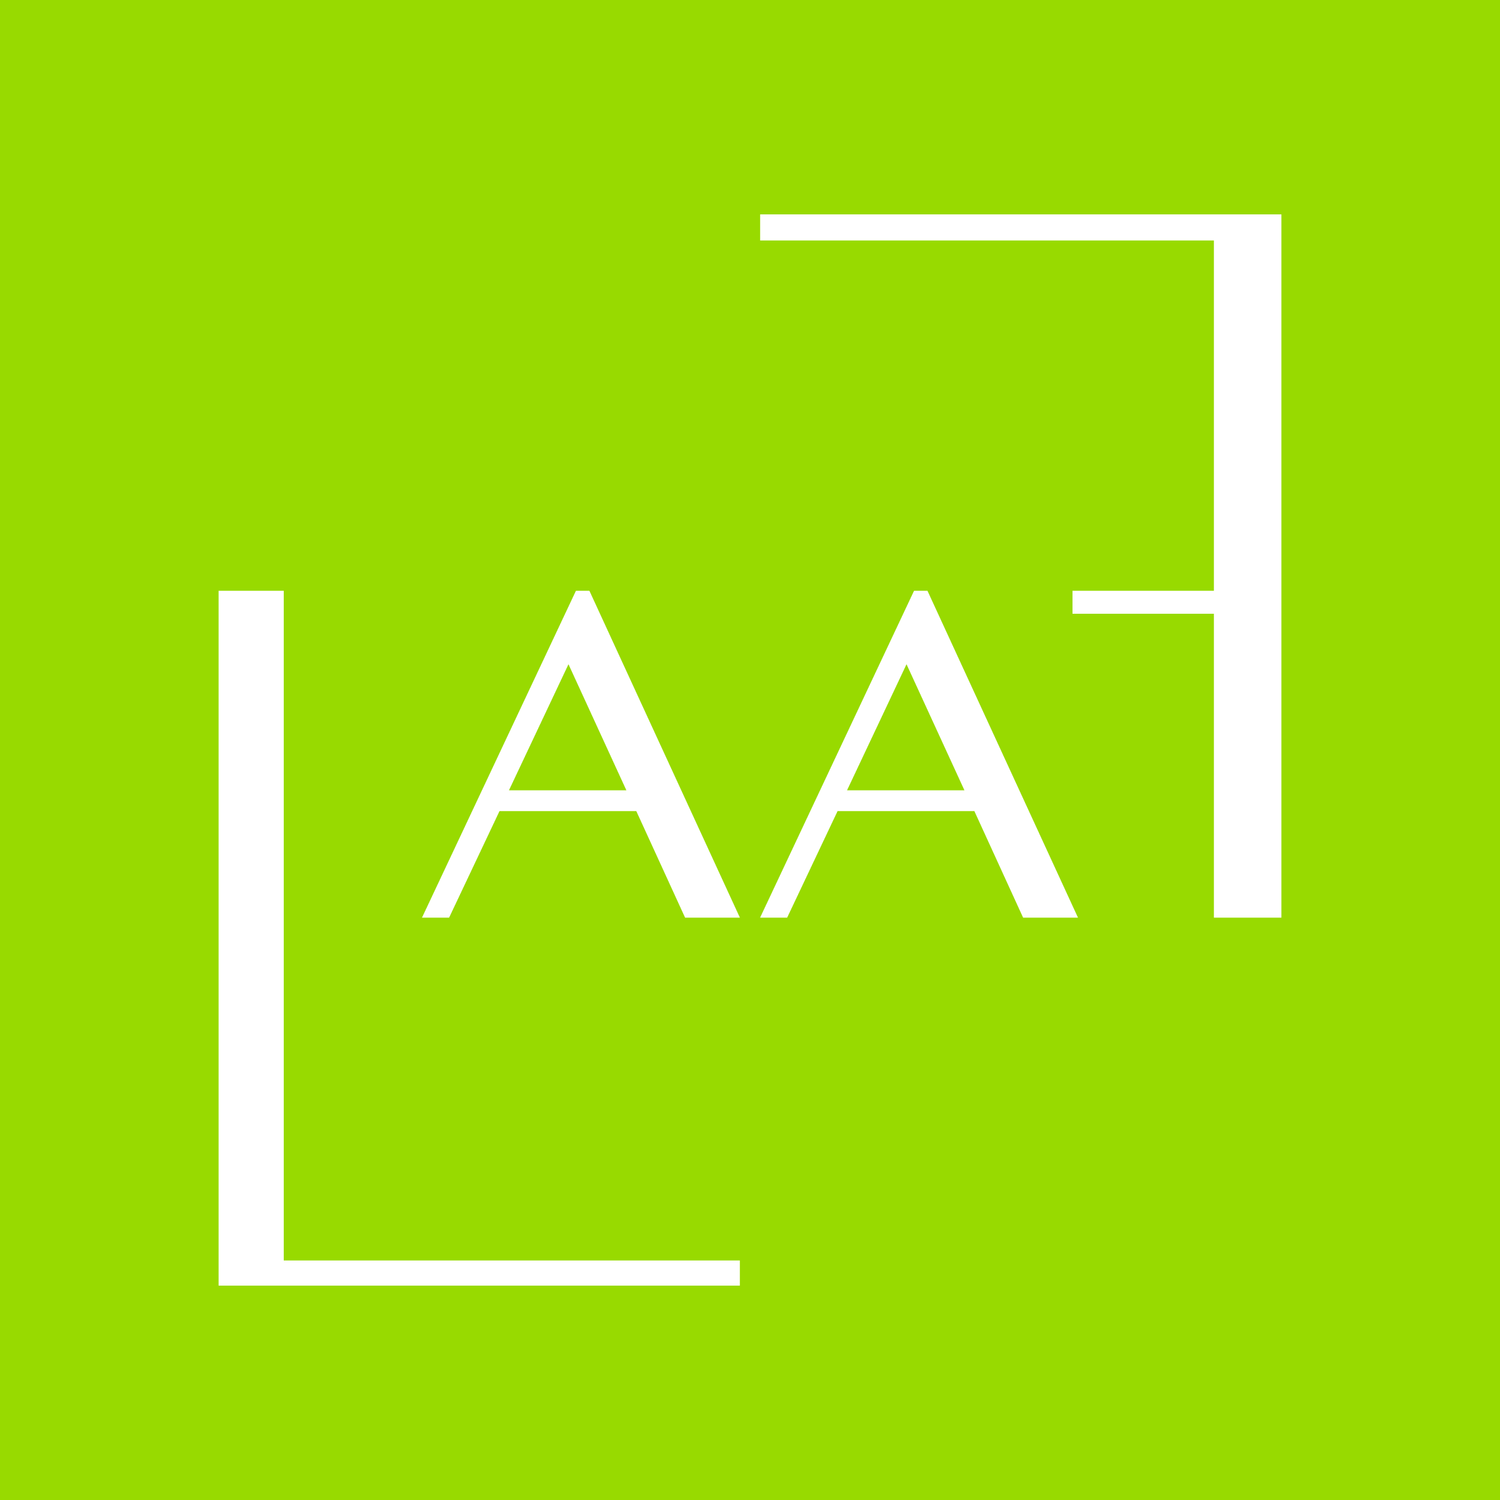 Laura Arrillaga-Andreessen Foundation (Copy)